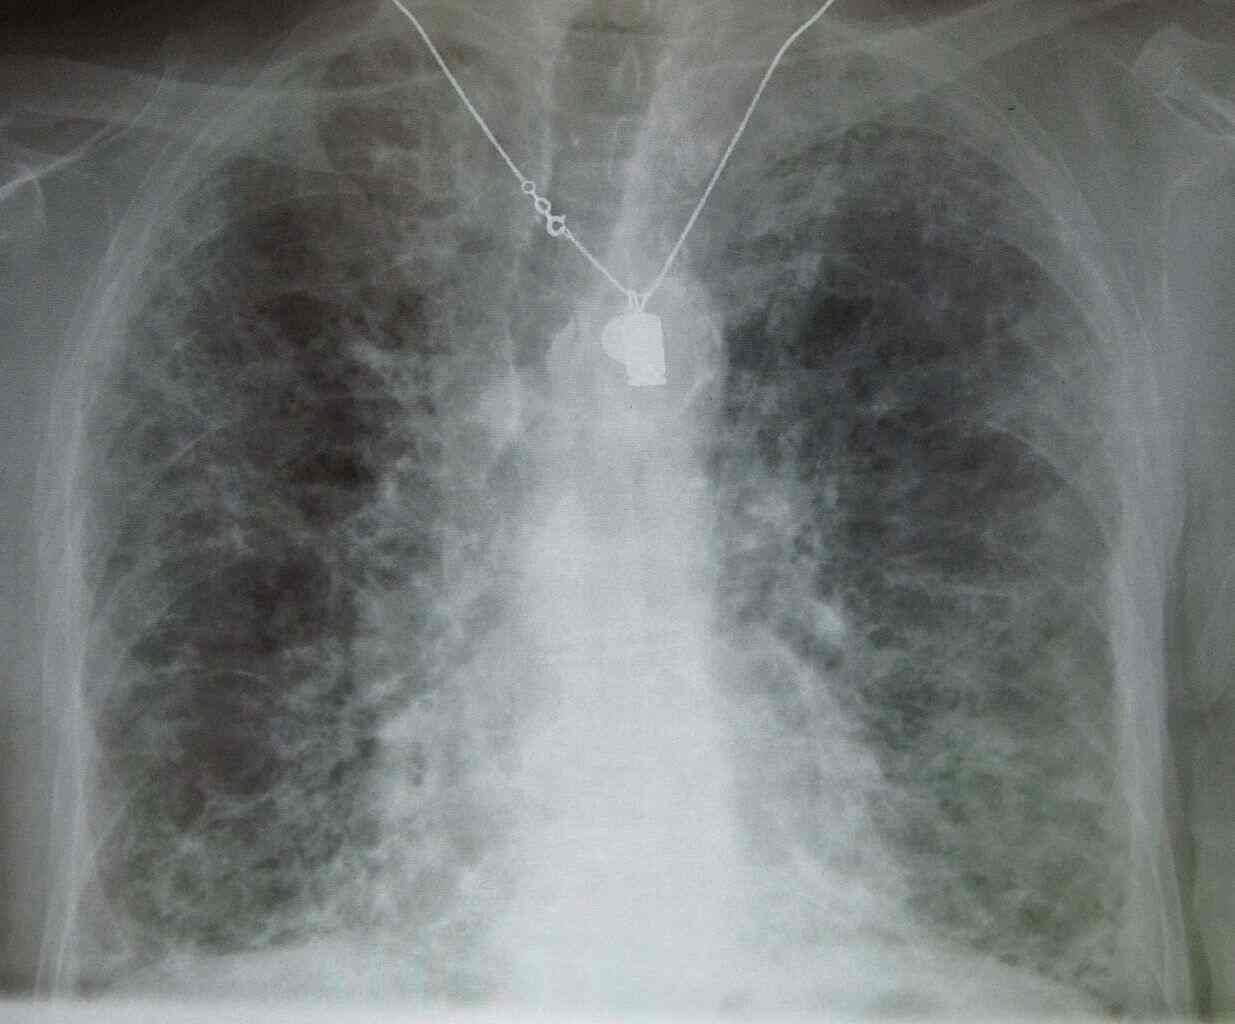 Fibrosis paru xray